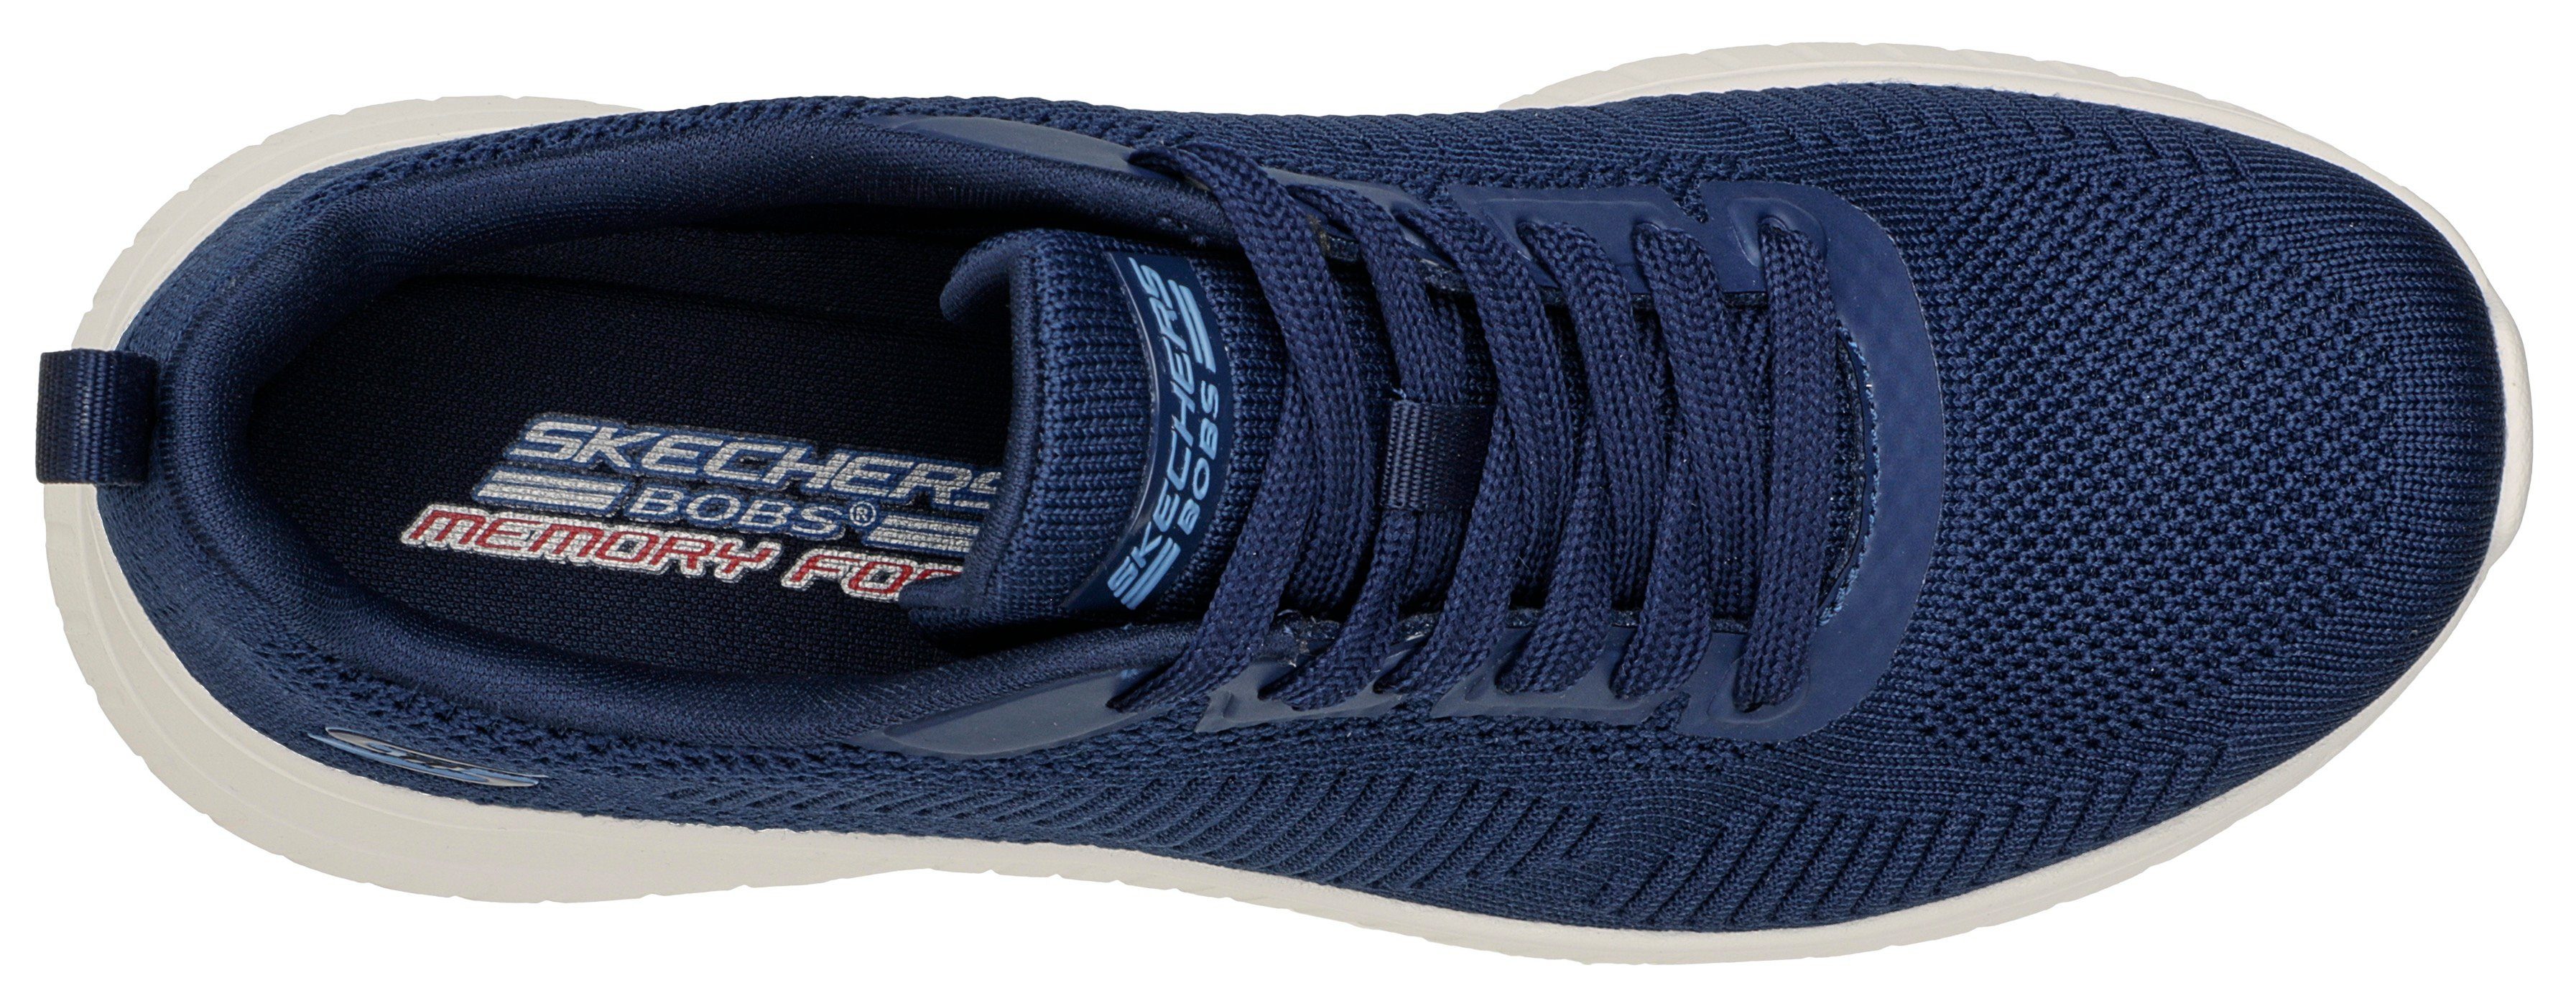 Skechers SQUAD OFF Sneaker komfortabler mit navy Innensohle CHAOS FACE BOBS